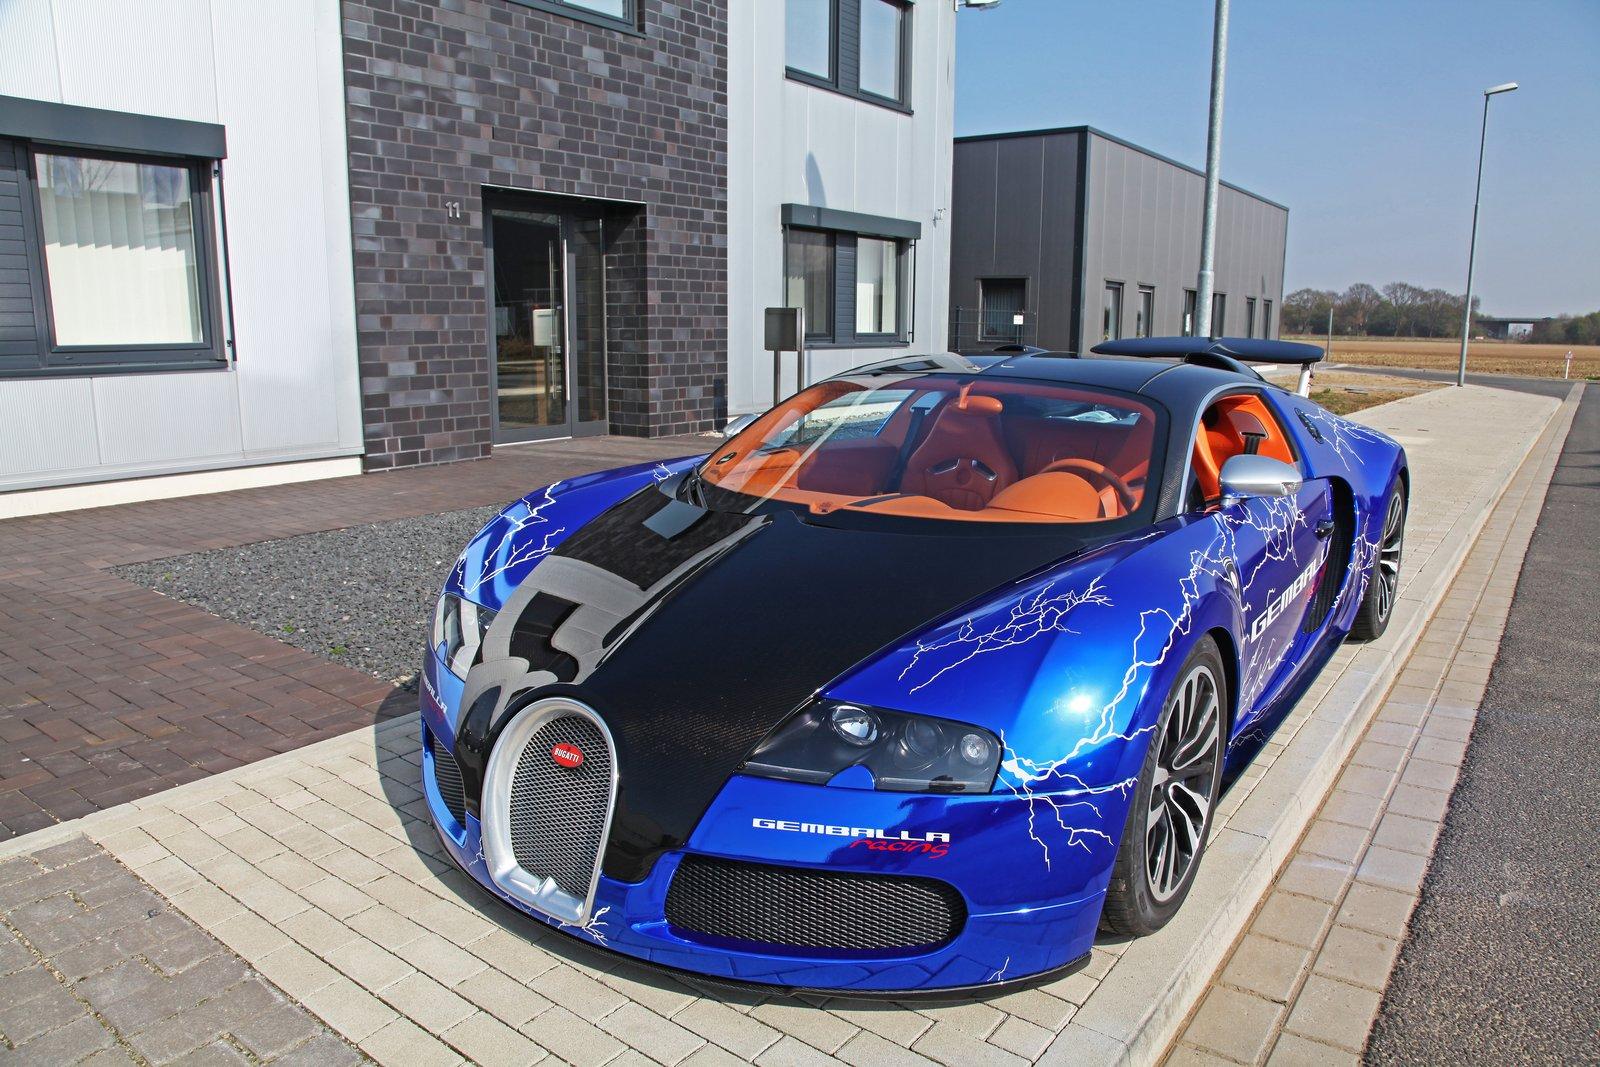 Midnight Majesty: A 2008 Bugatti Veyron Sang Noir